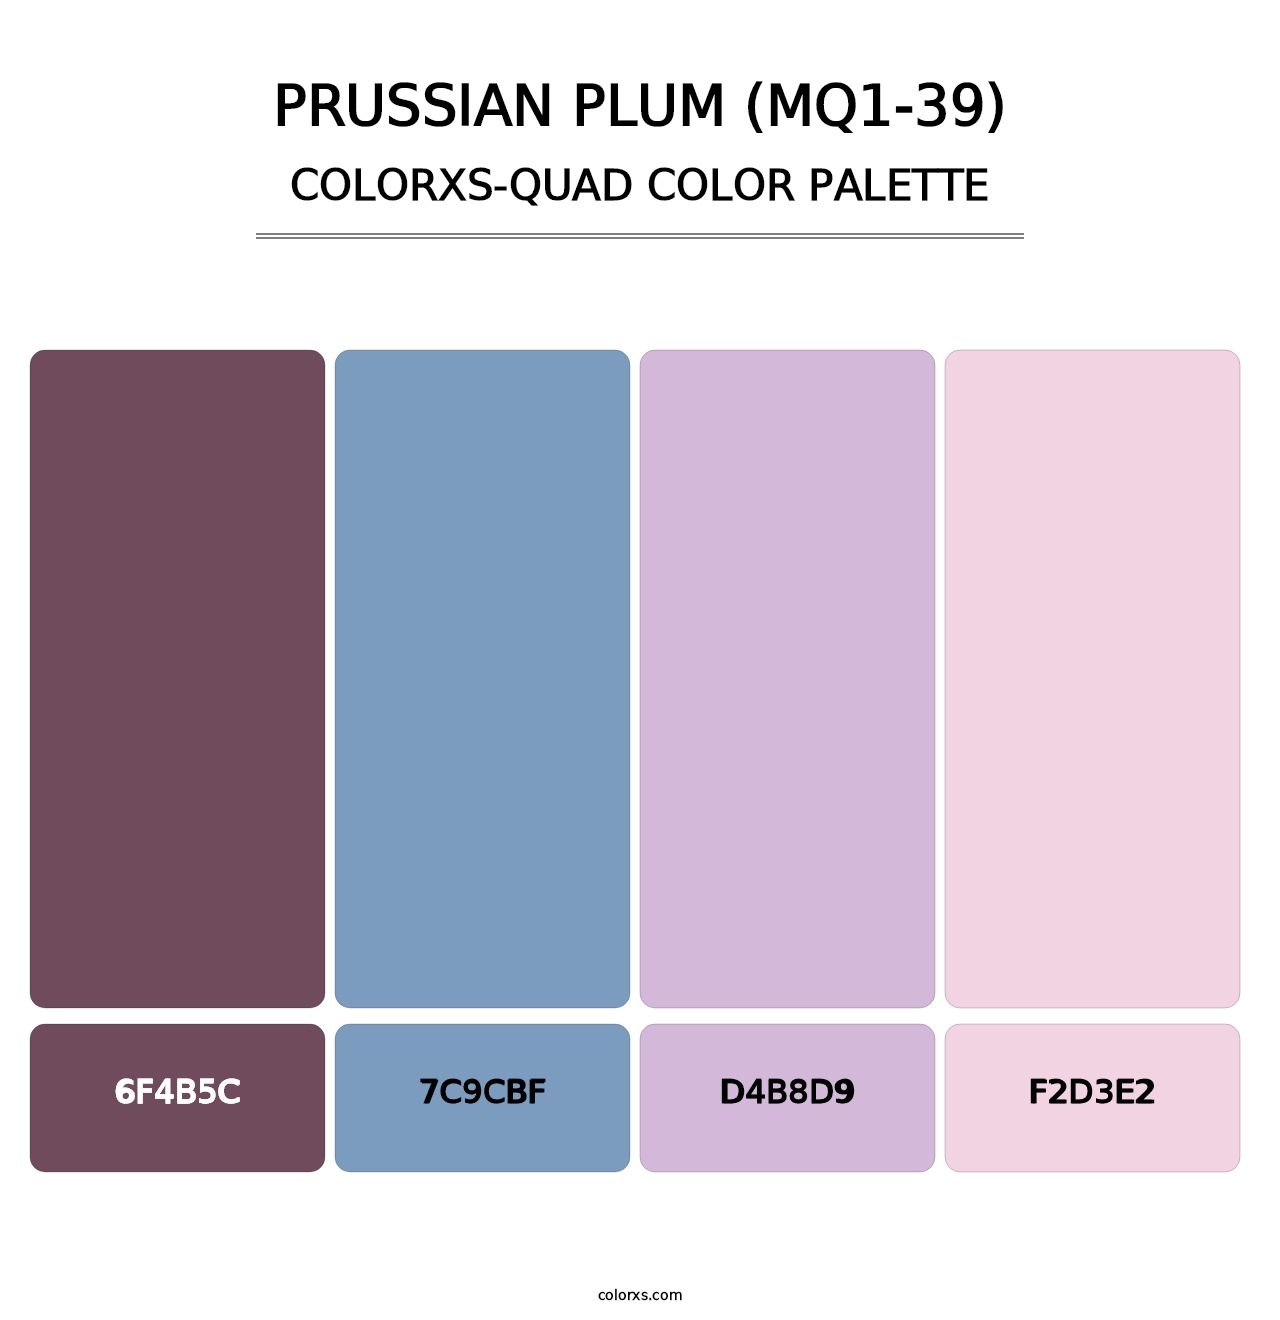 Prussian Plum (MQ1-39) - Colorxs Quad Palette